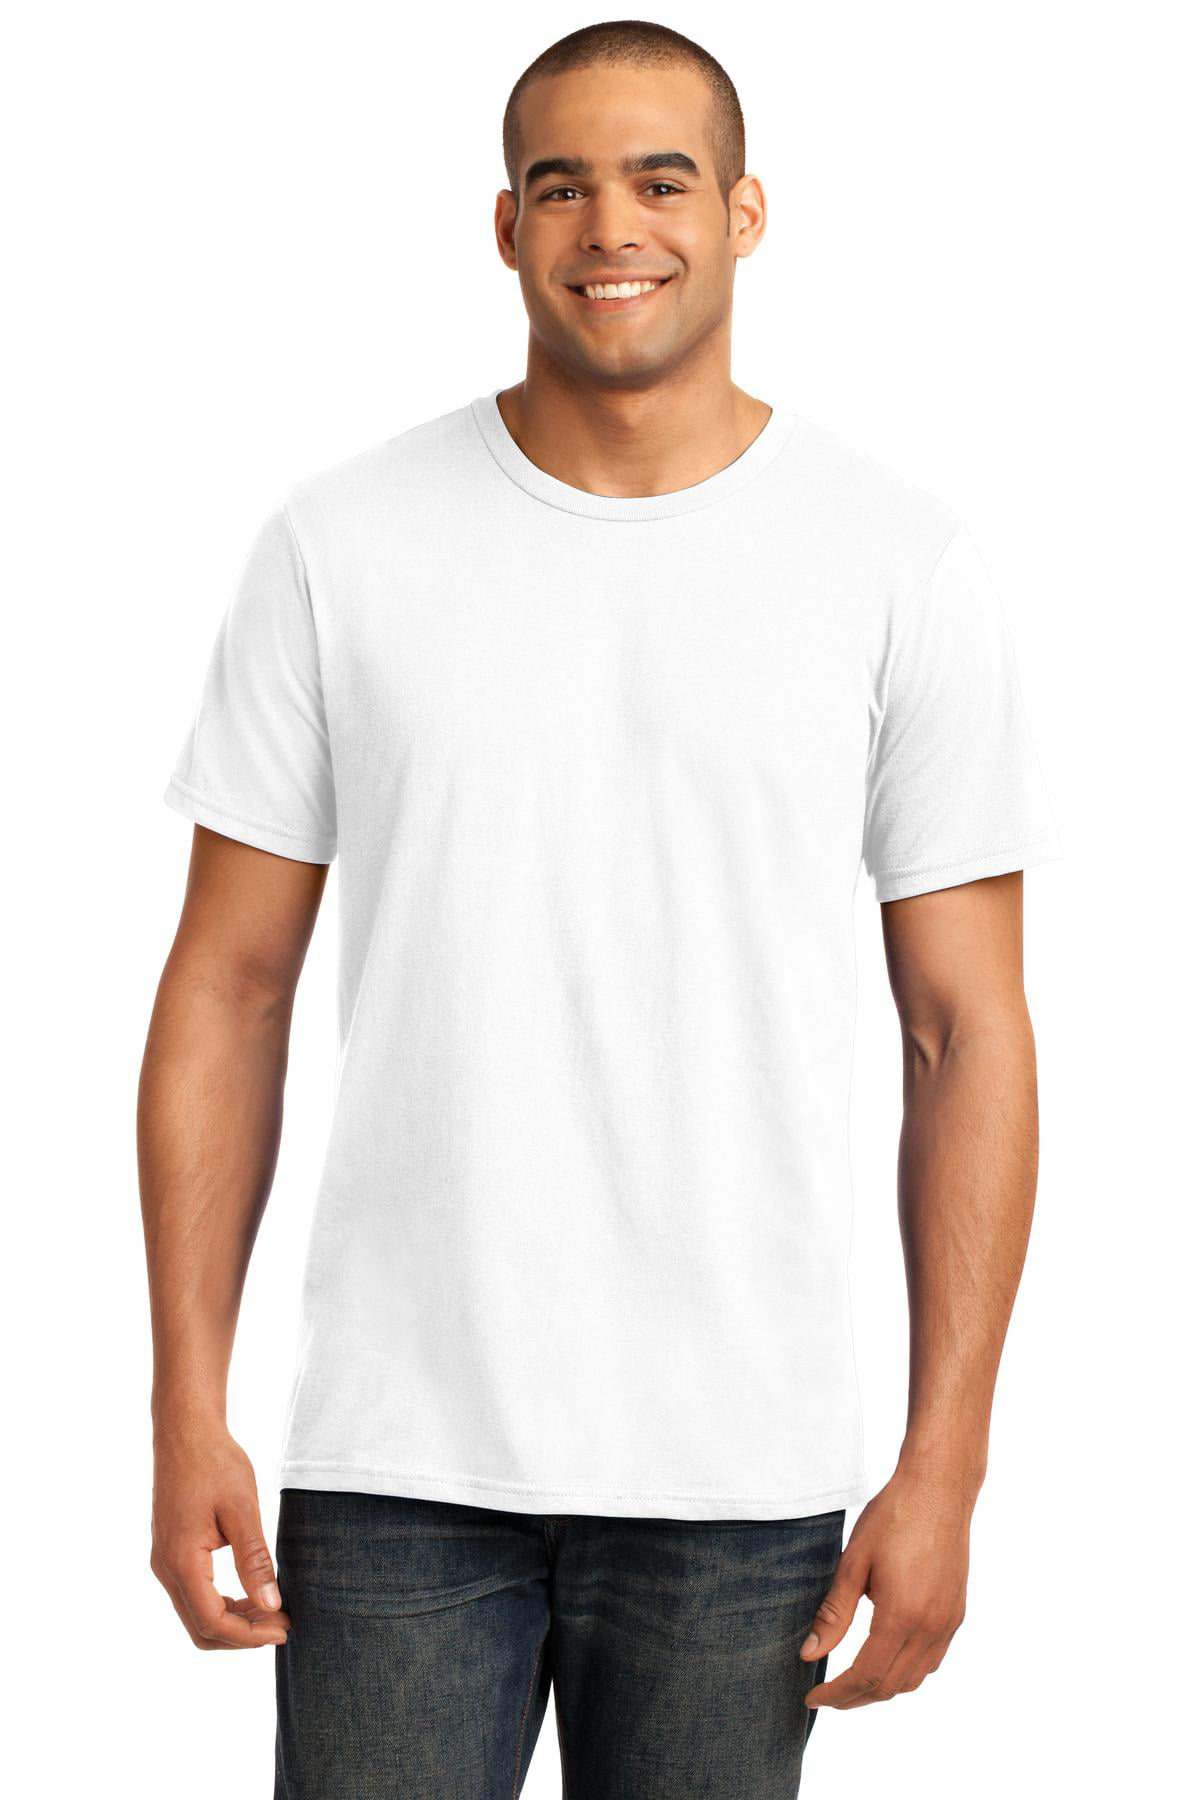 Super Soft Jersey V-Neck T Shirt Spandex/Polyester Blend Birdman Sleep Pajama TONY HAWK Mens Lounge Shirt